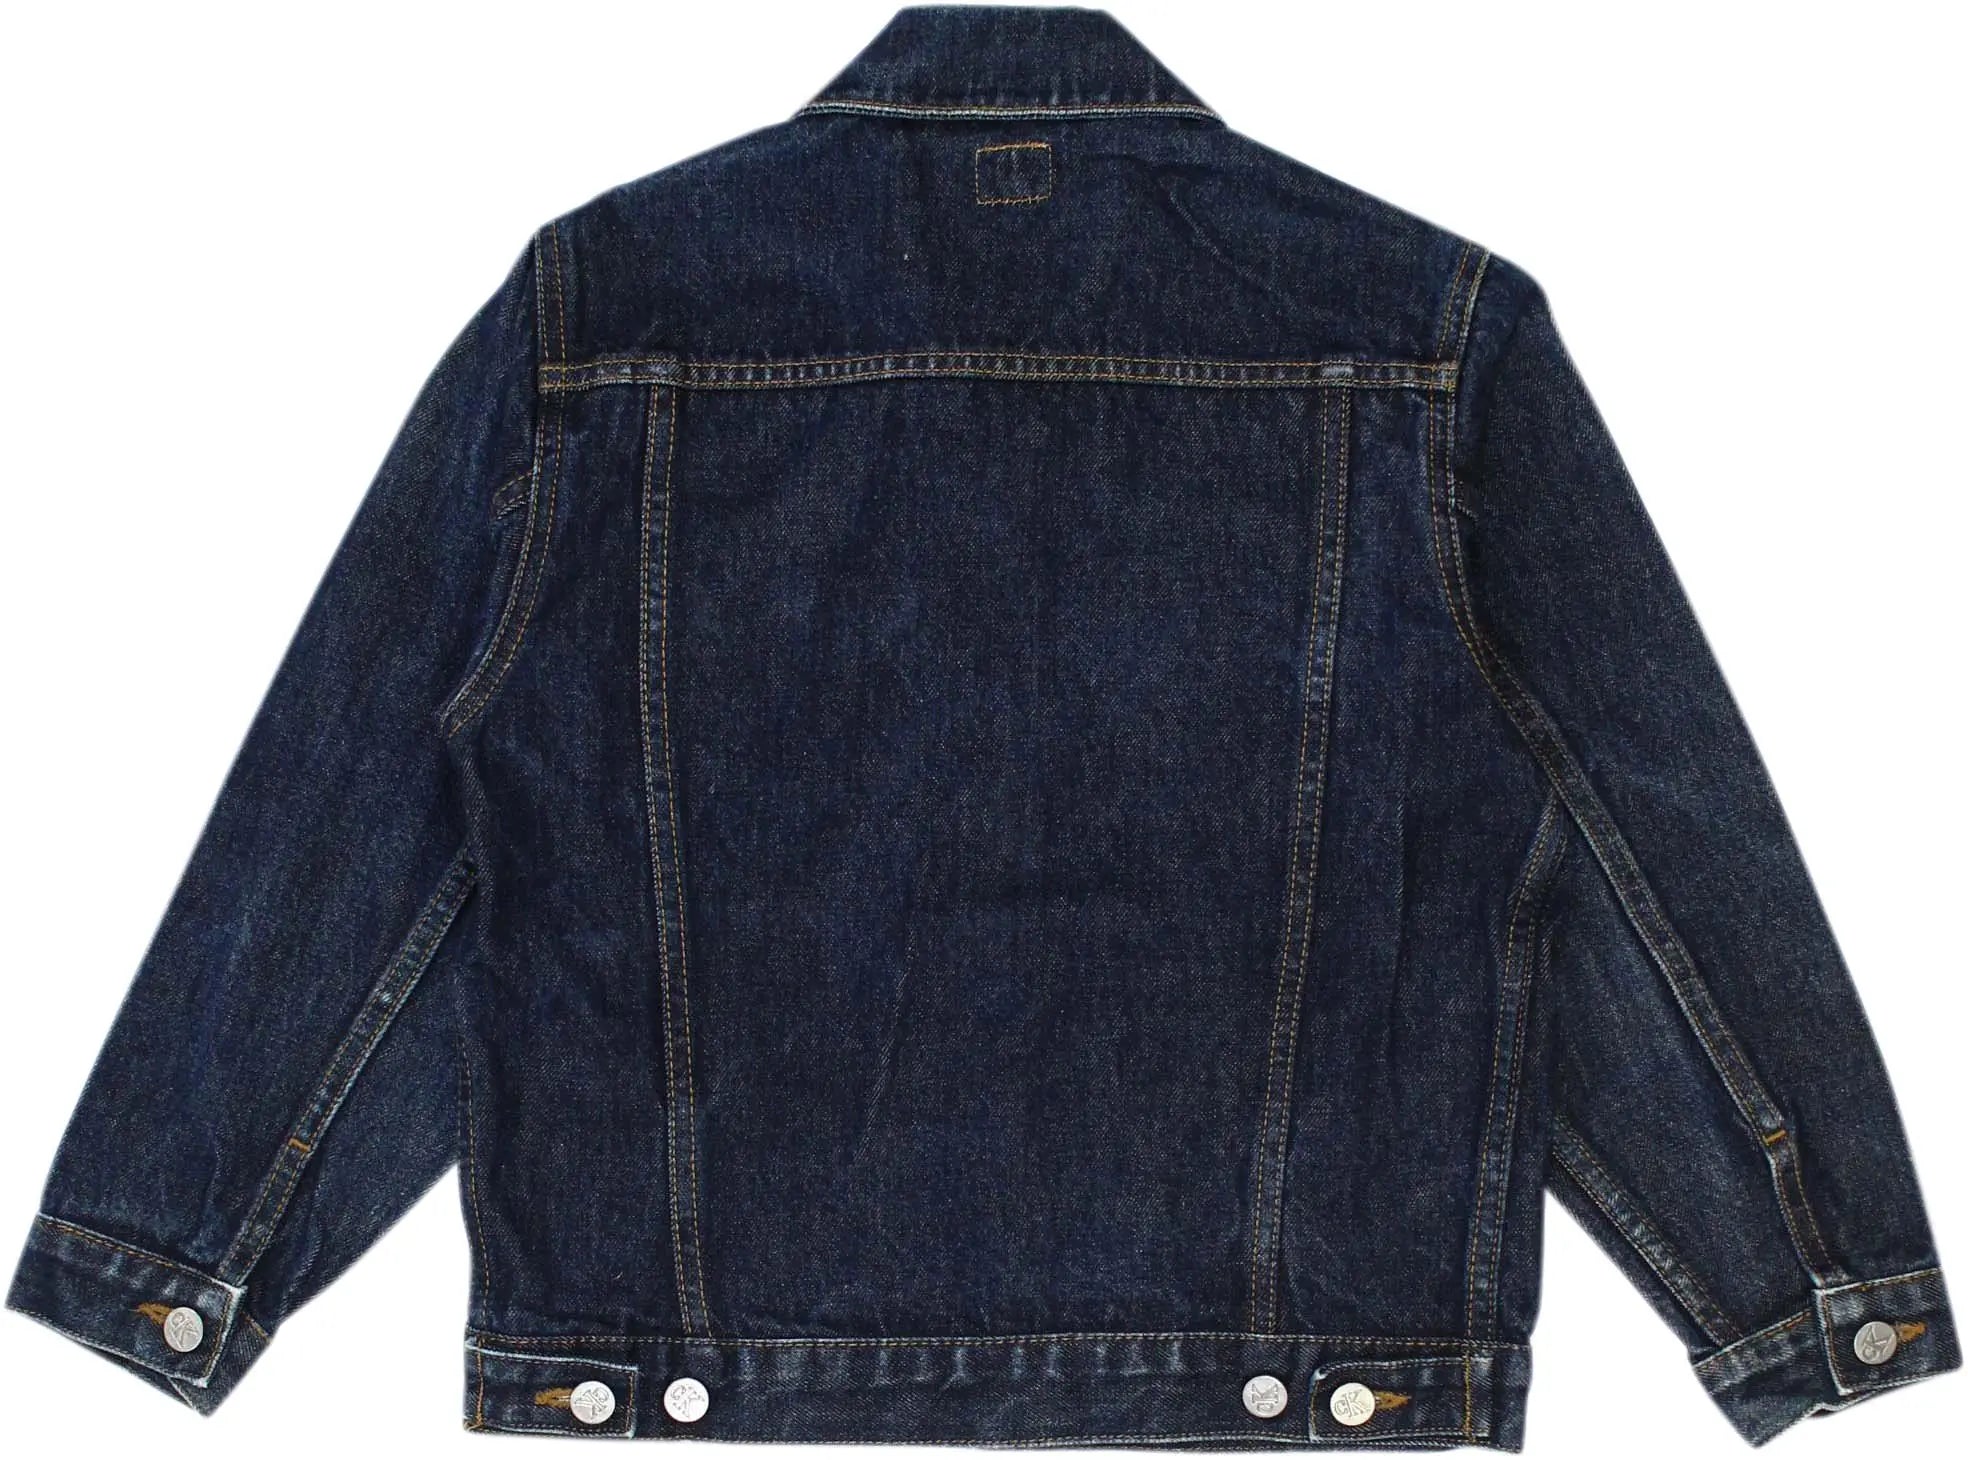 Calvin Klein Jeans - Blue Denim Jacket by Calvin Klein Jeans- ThriftTale.com - Vintage and second handclothing